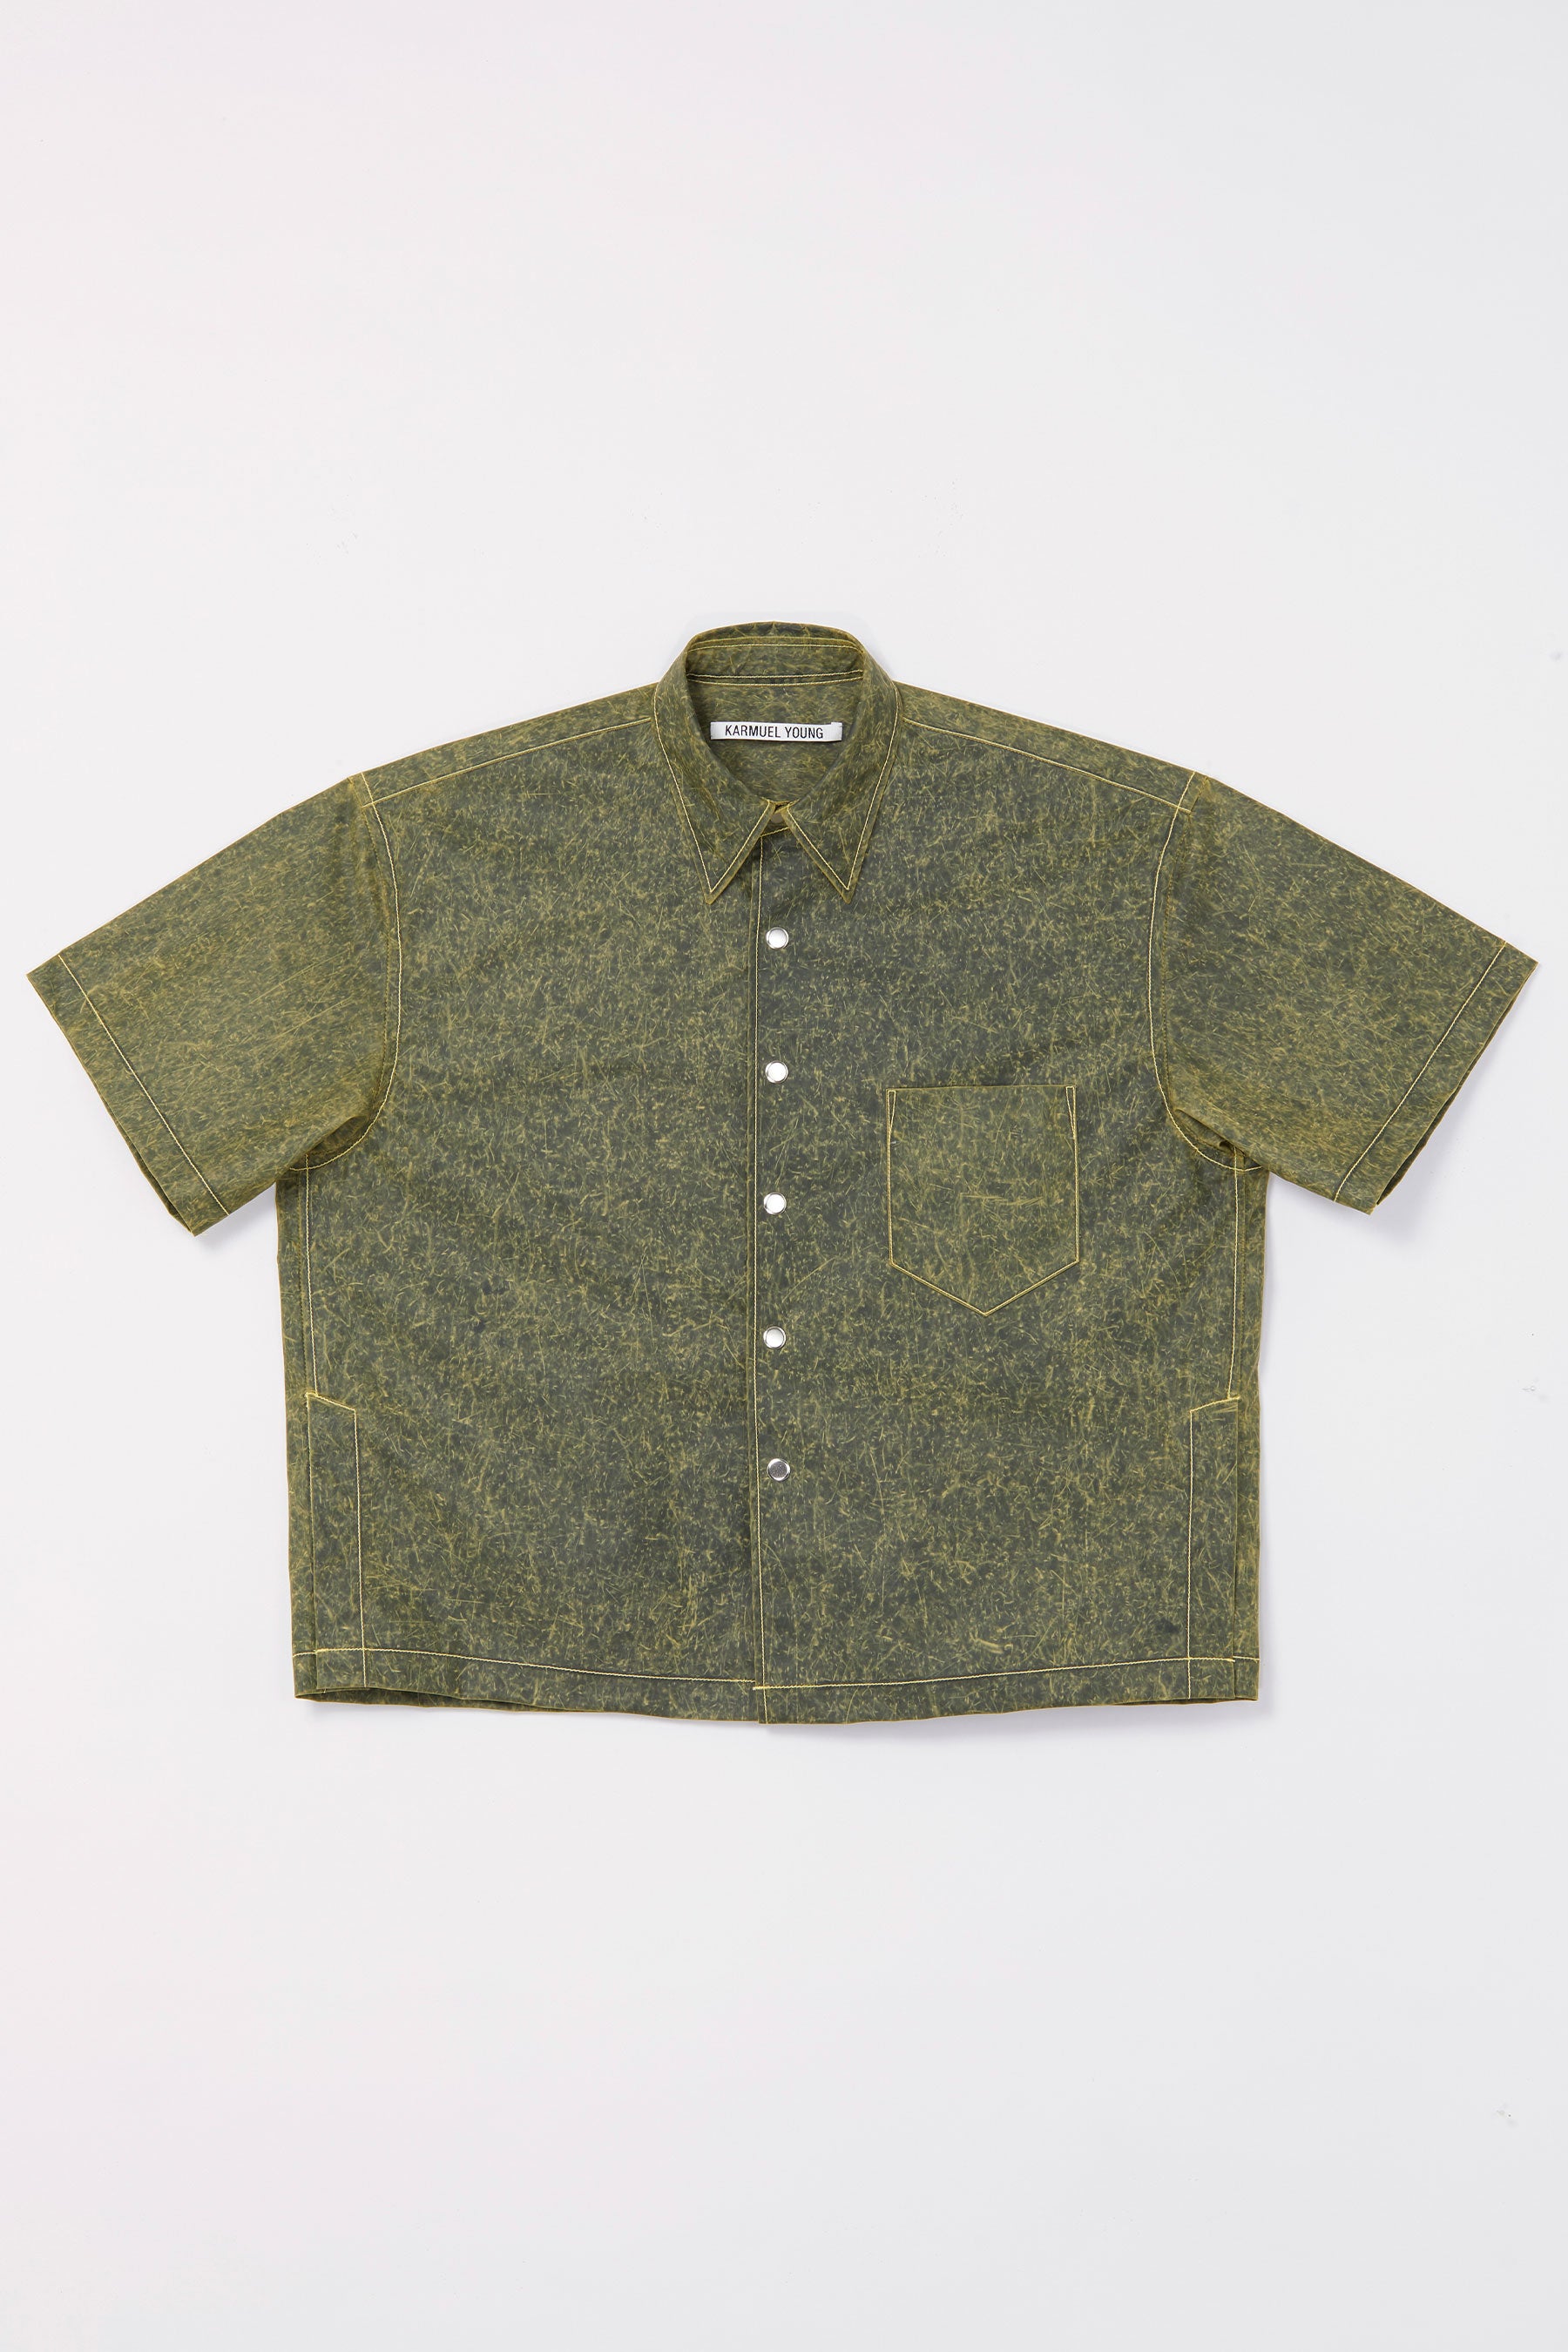 Olive Green Square Short Sleeved Overshirt